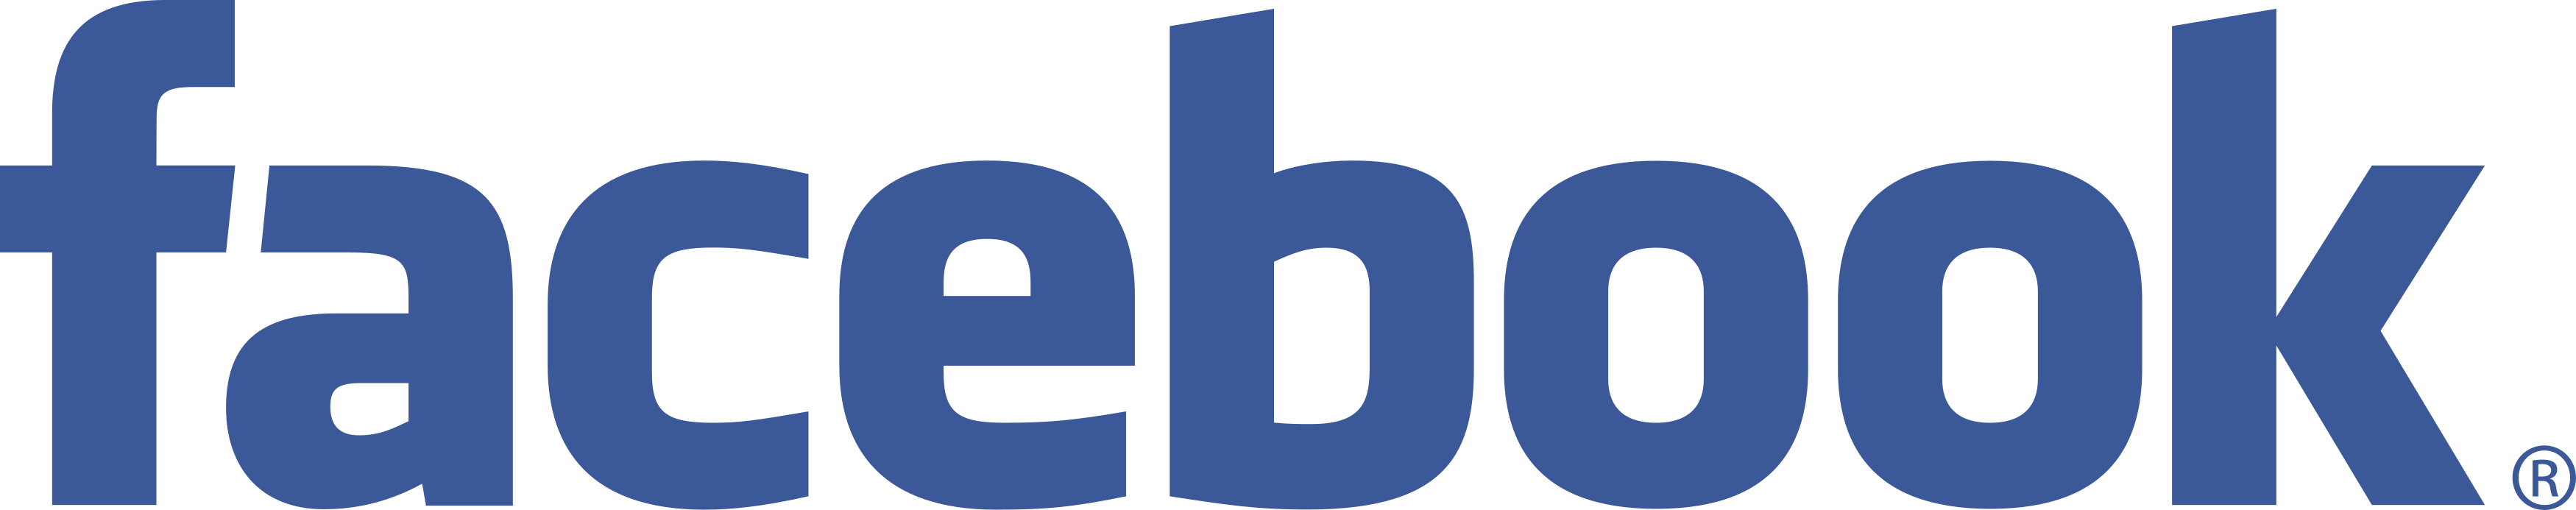 facebook-logo-1-1.png